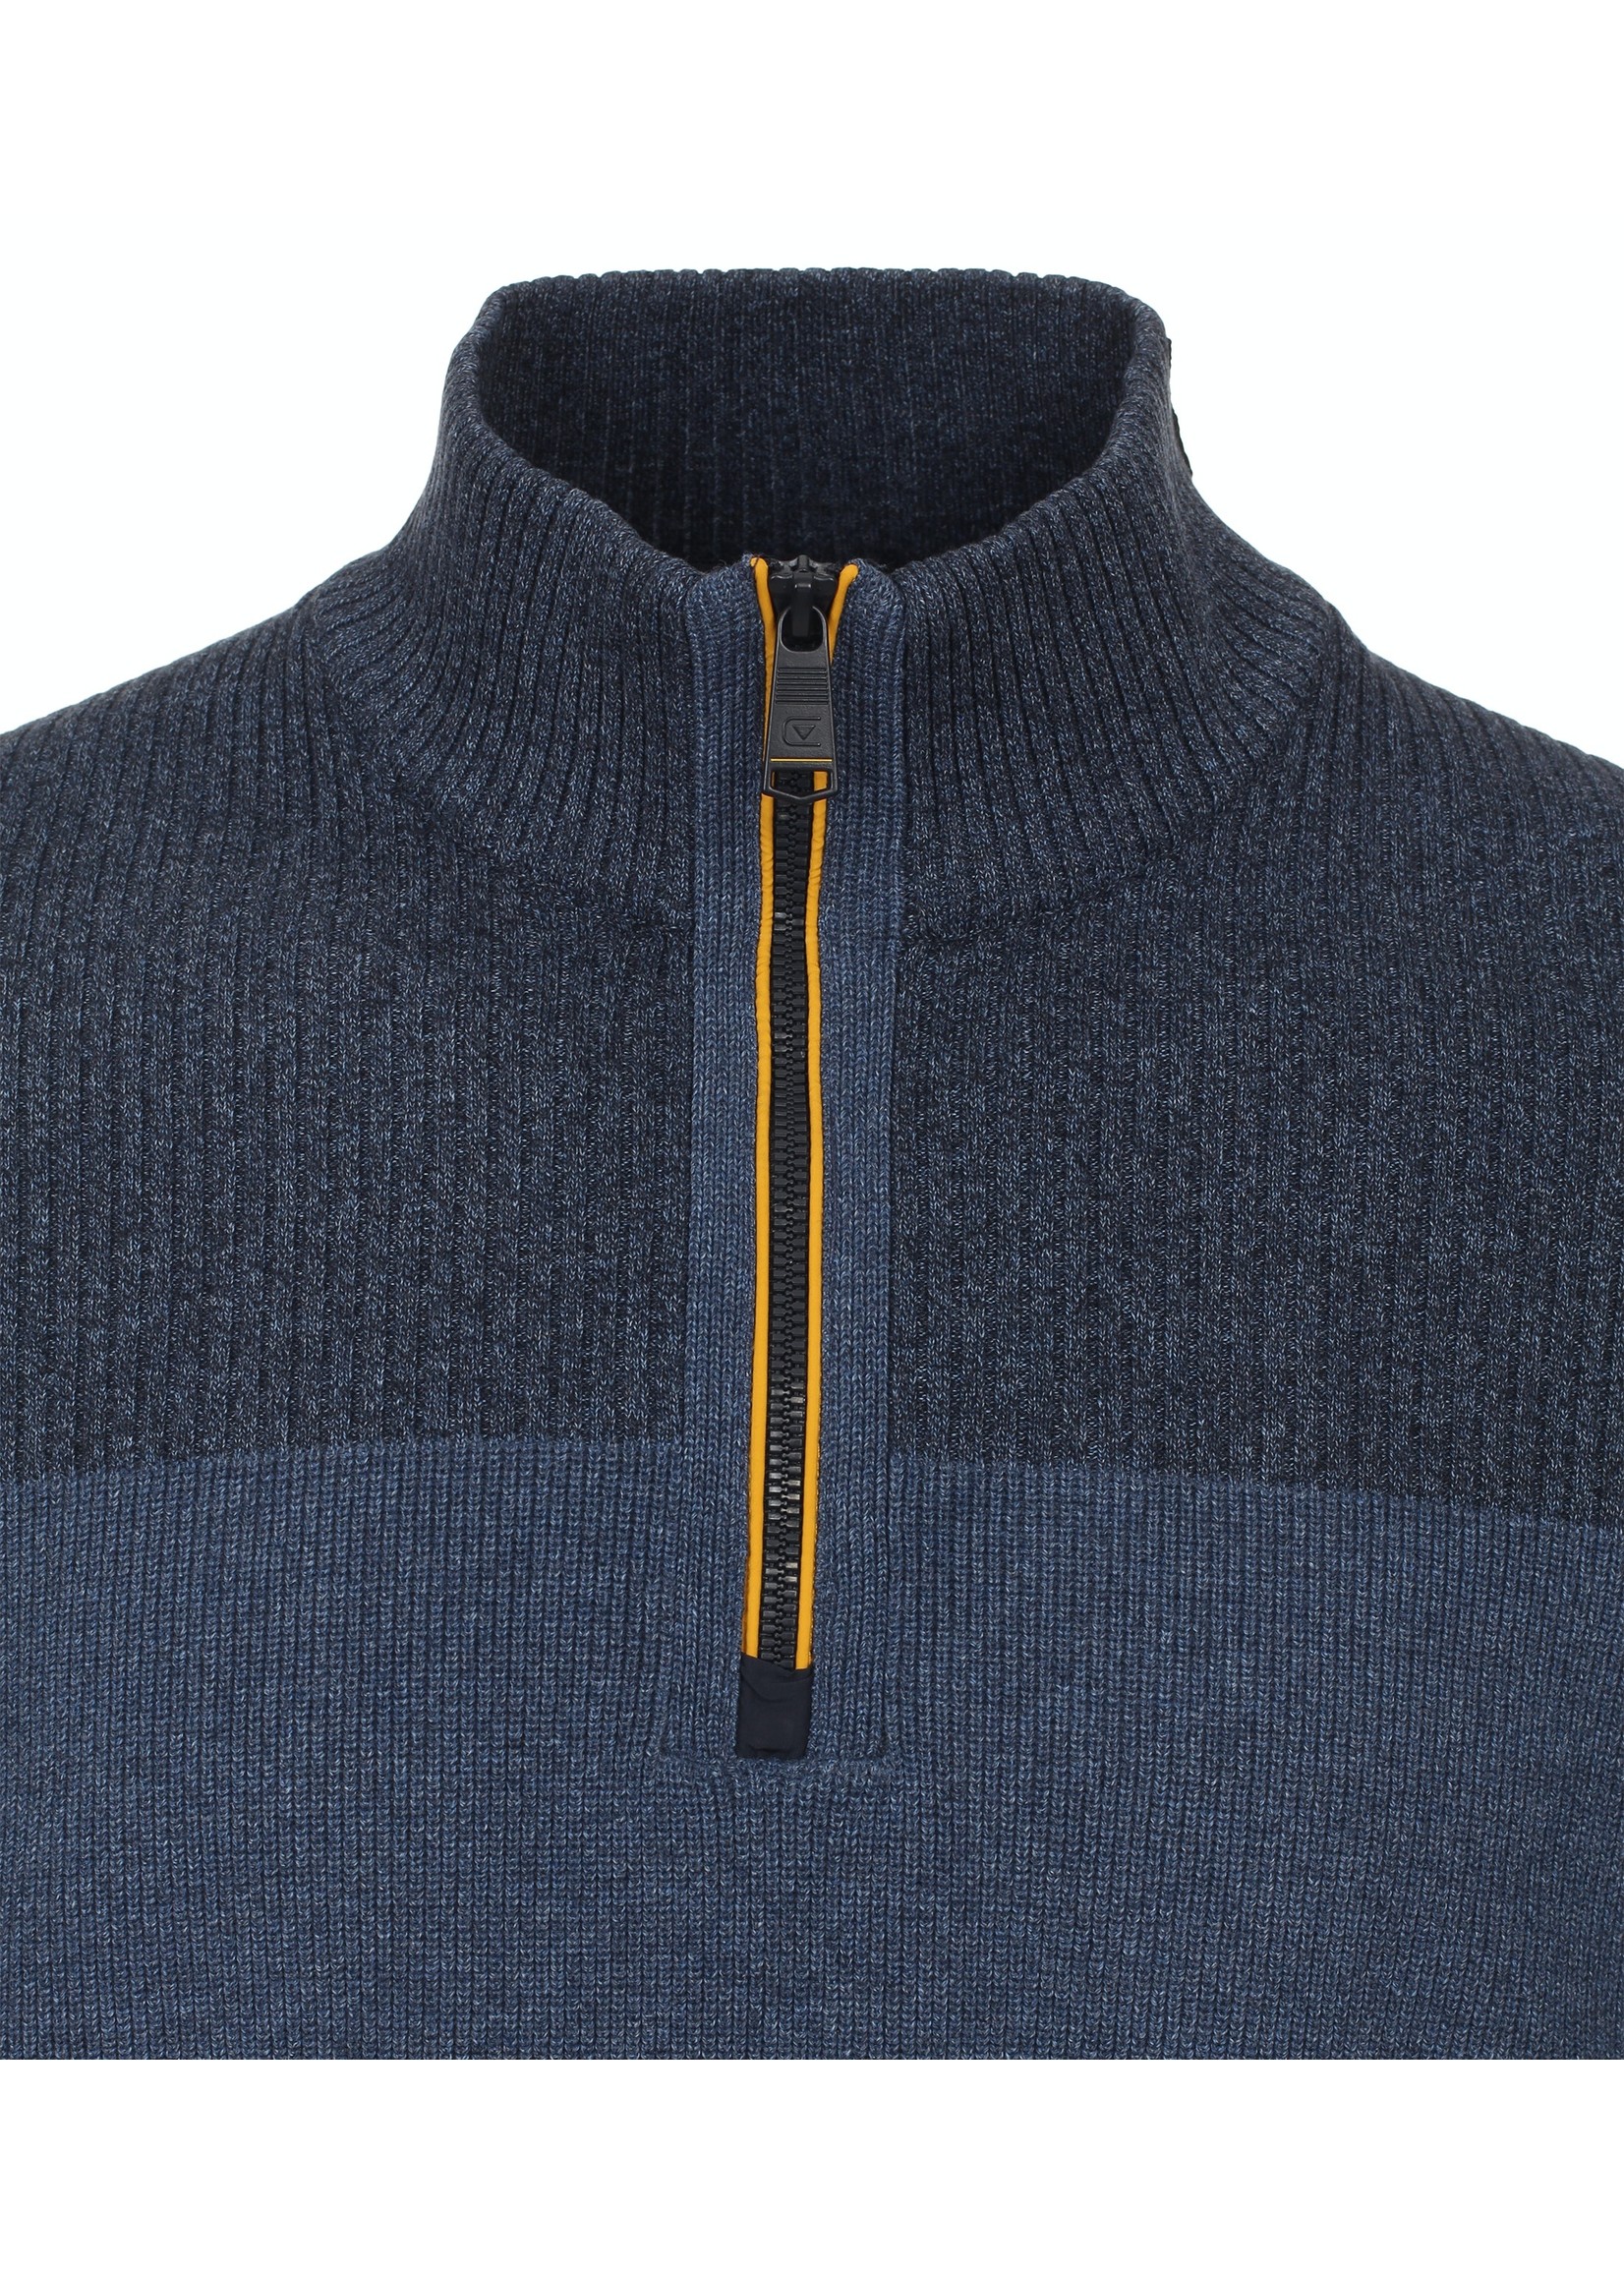 CASA MODA Men's cotton knit ¼ zip sweater